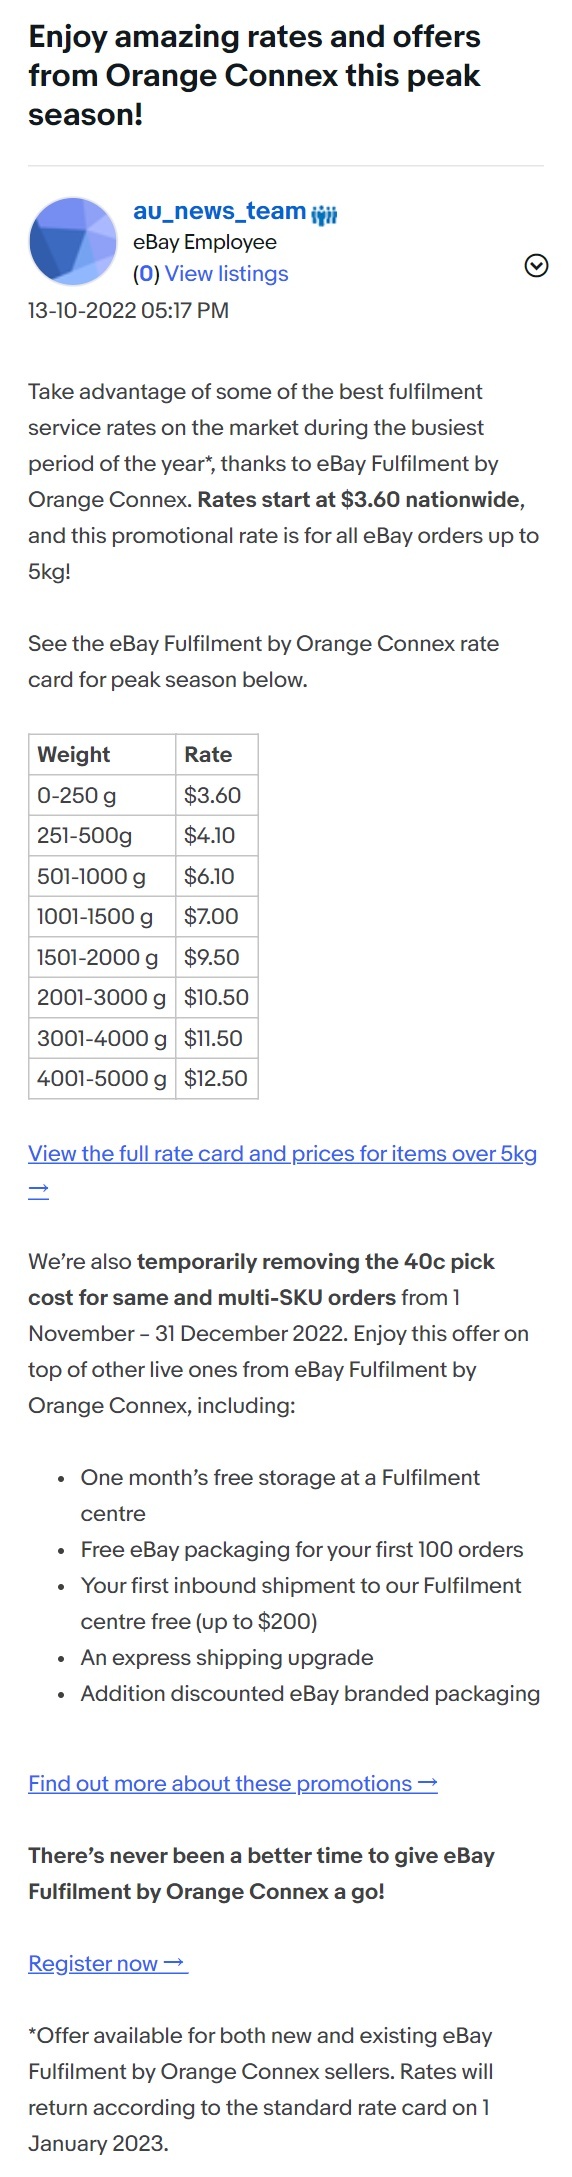 eBay澳洲站上线批量刊登功能“multi-listing”